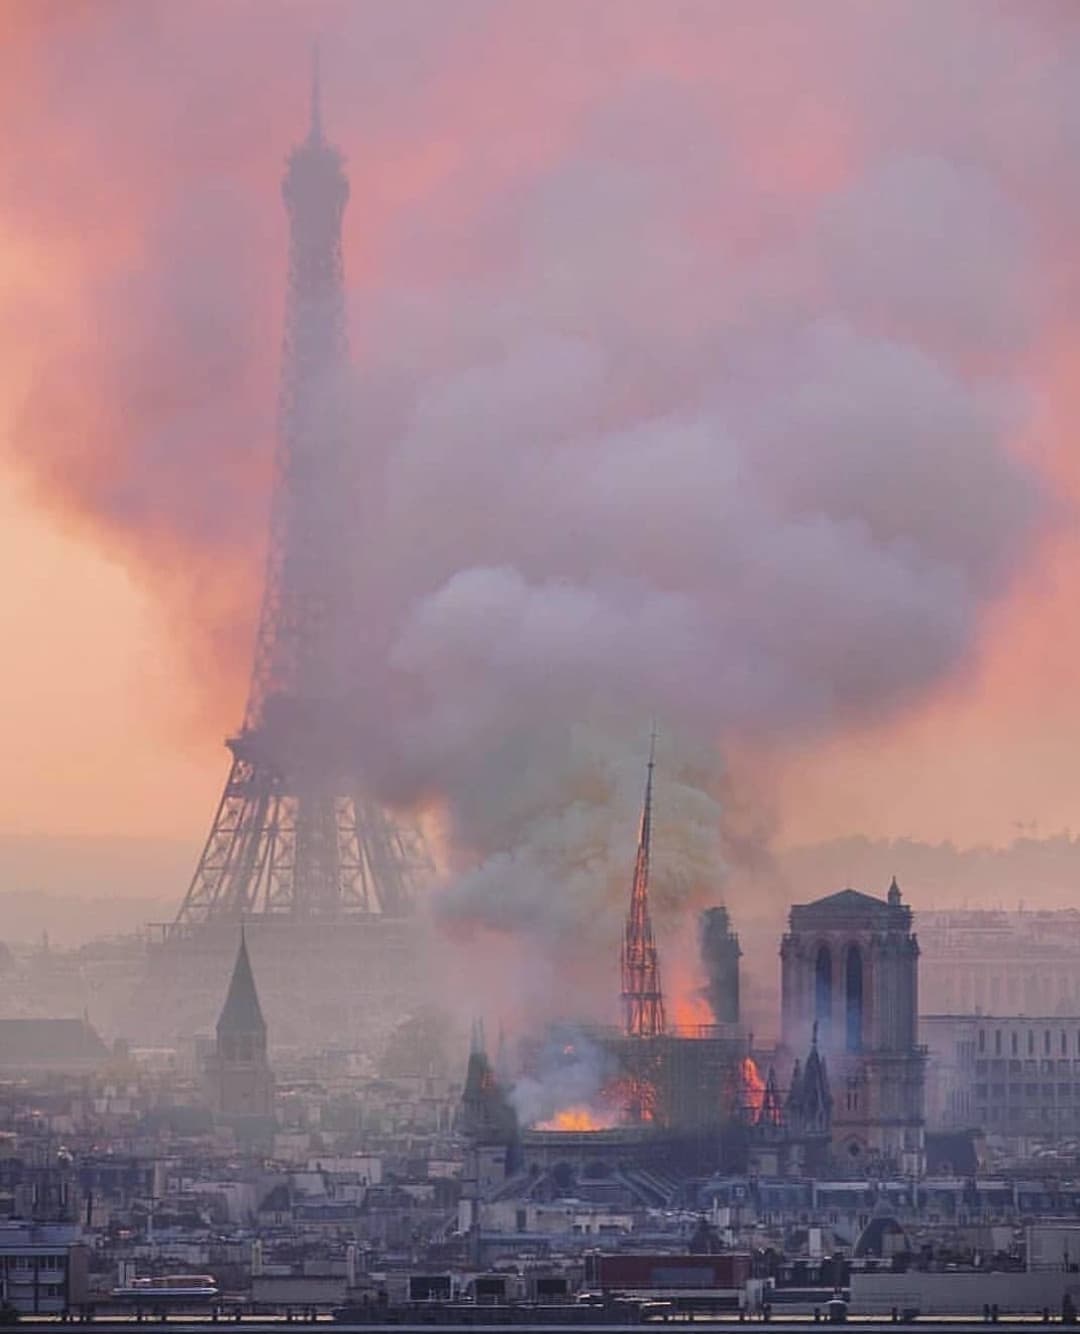 Pray for Notre Dame